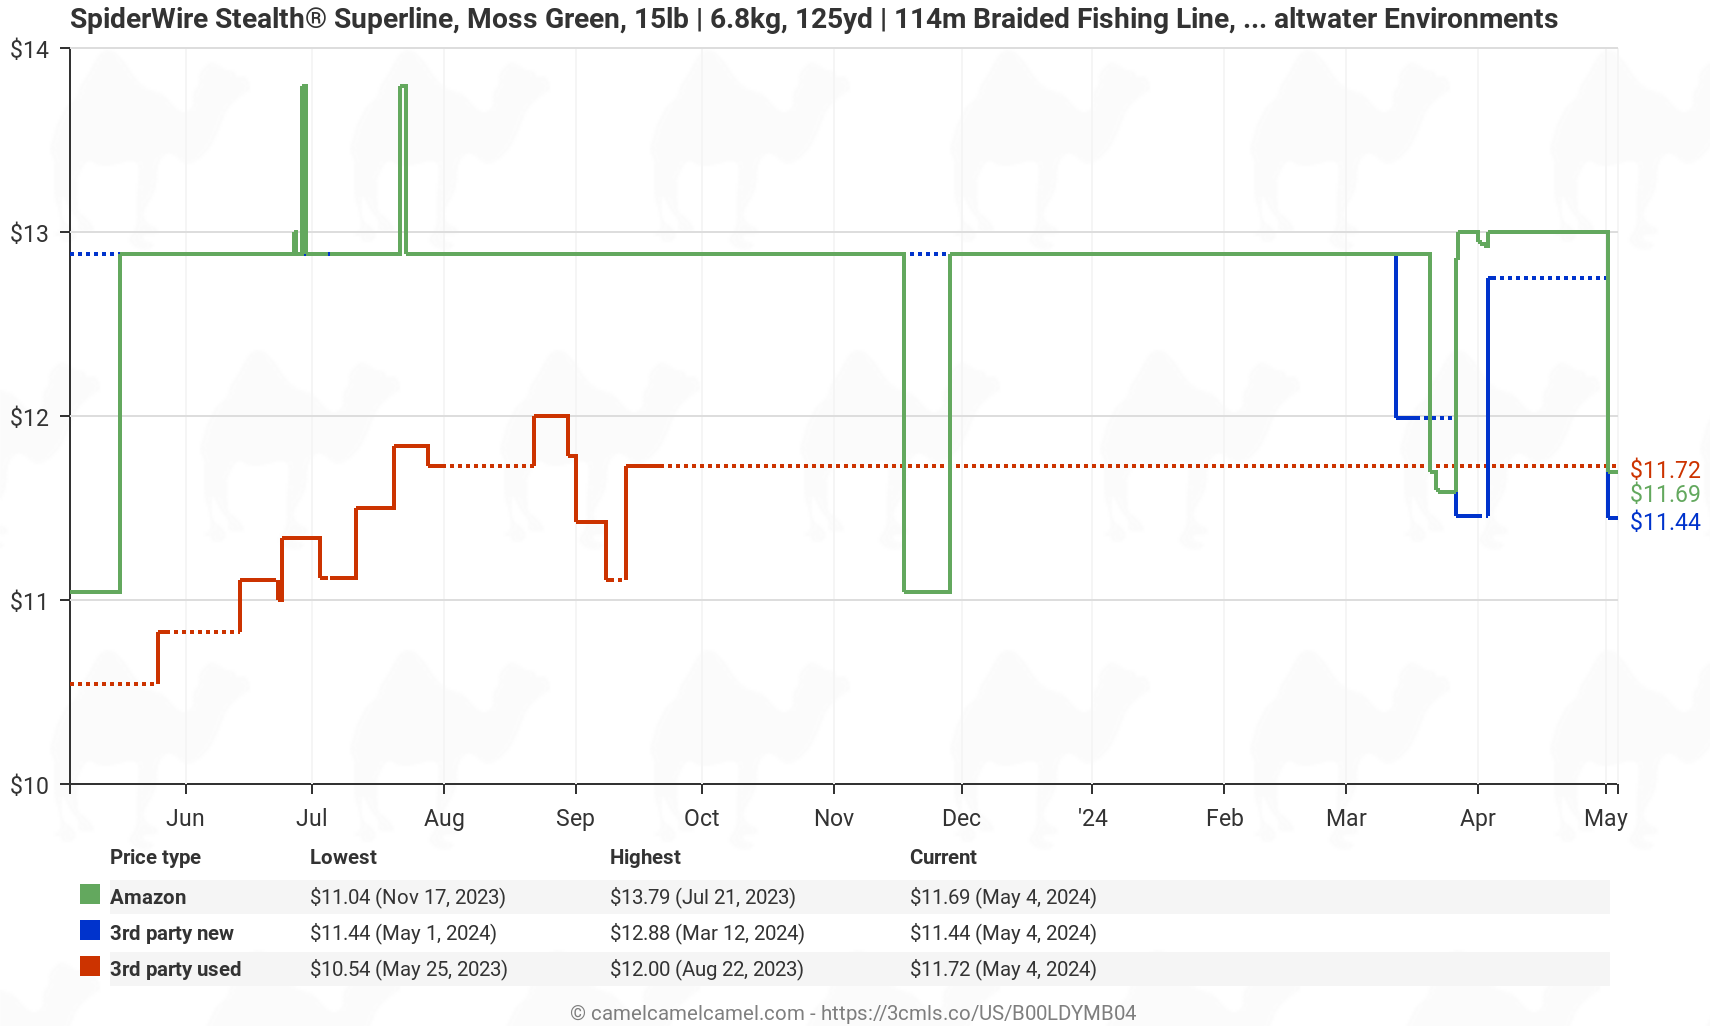 SpiderWire Stealth Braid Fishing Line - Price History: B00LDYMB04